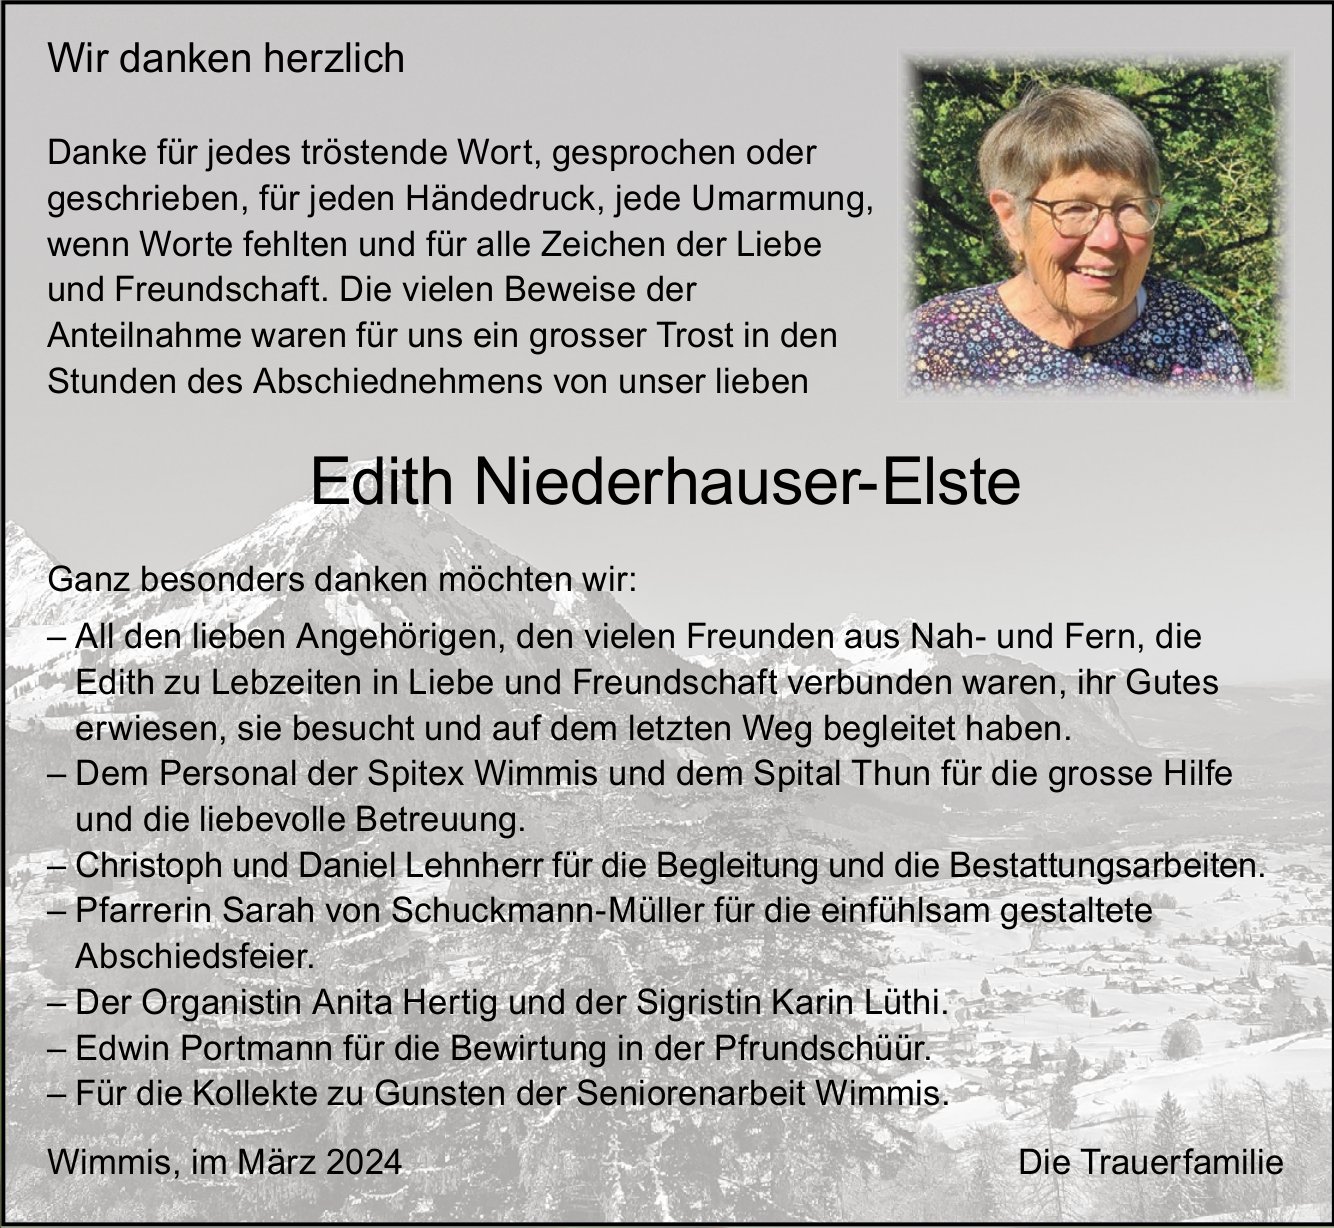 Edith Niederhauser-Elste, im März 2024 / DS